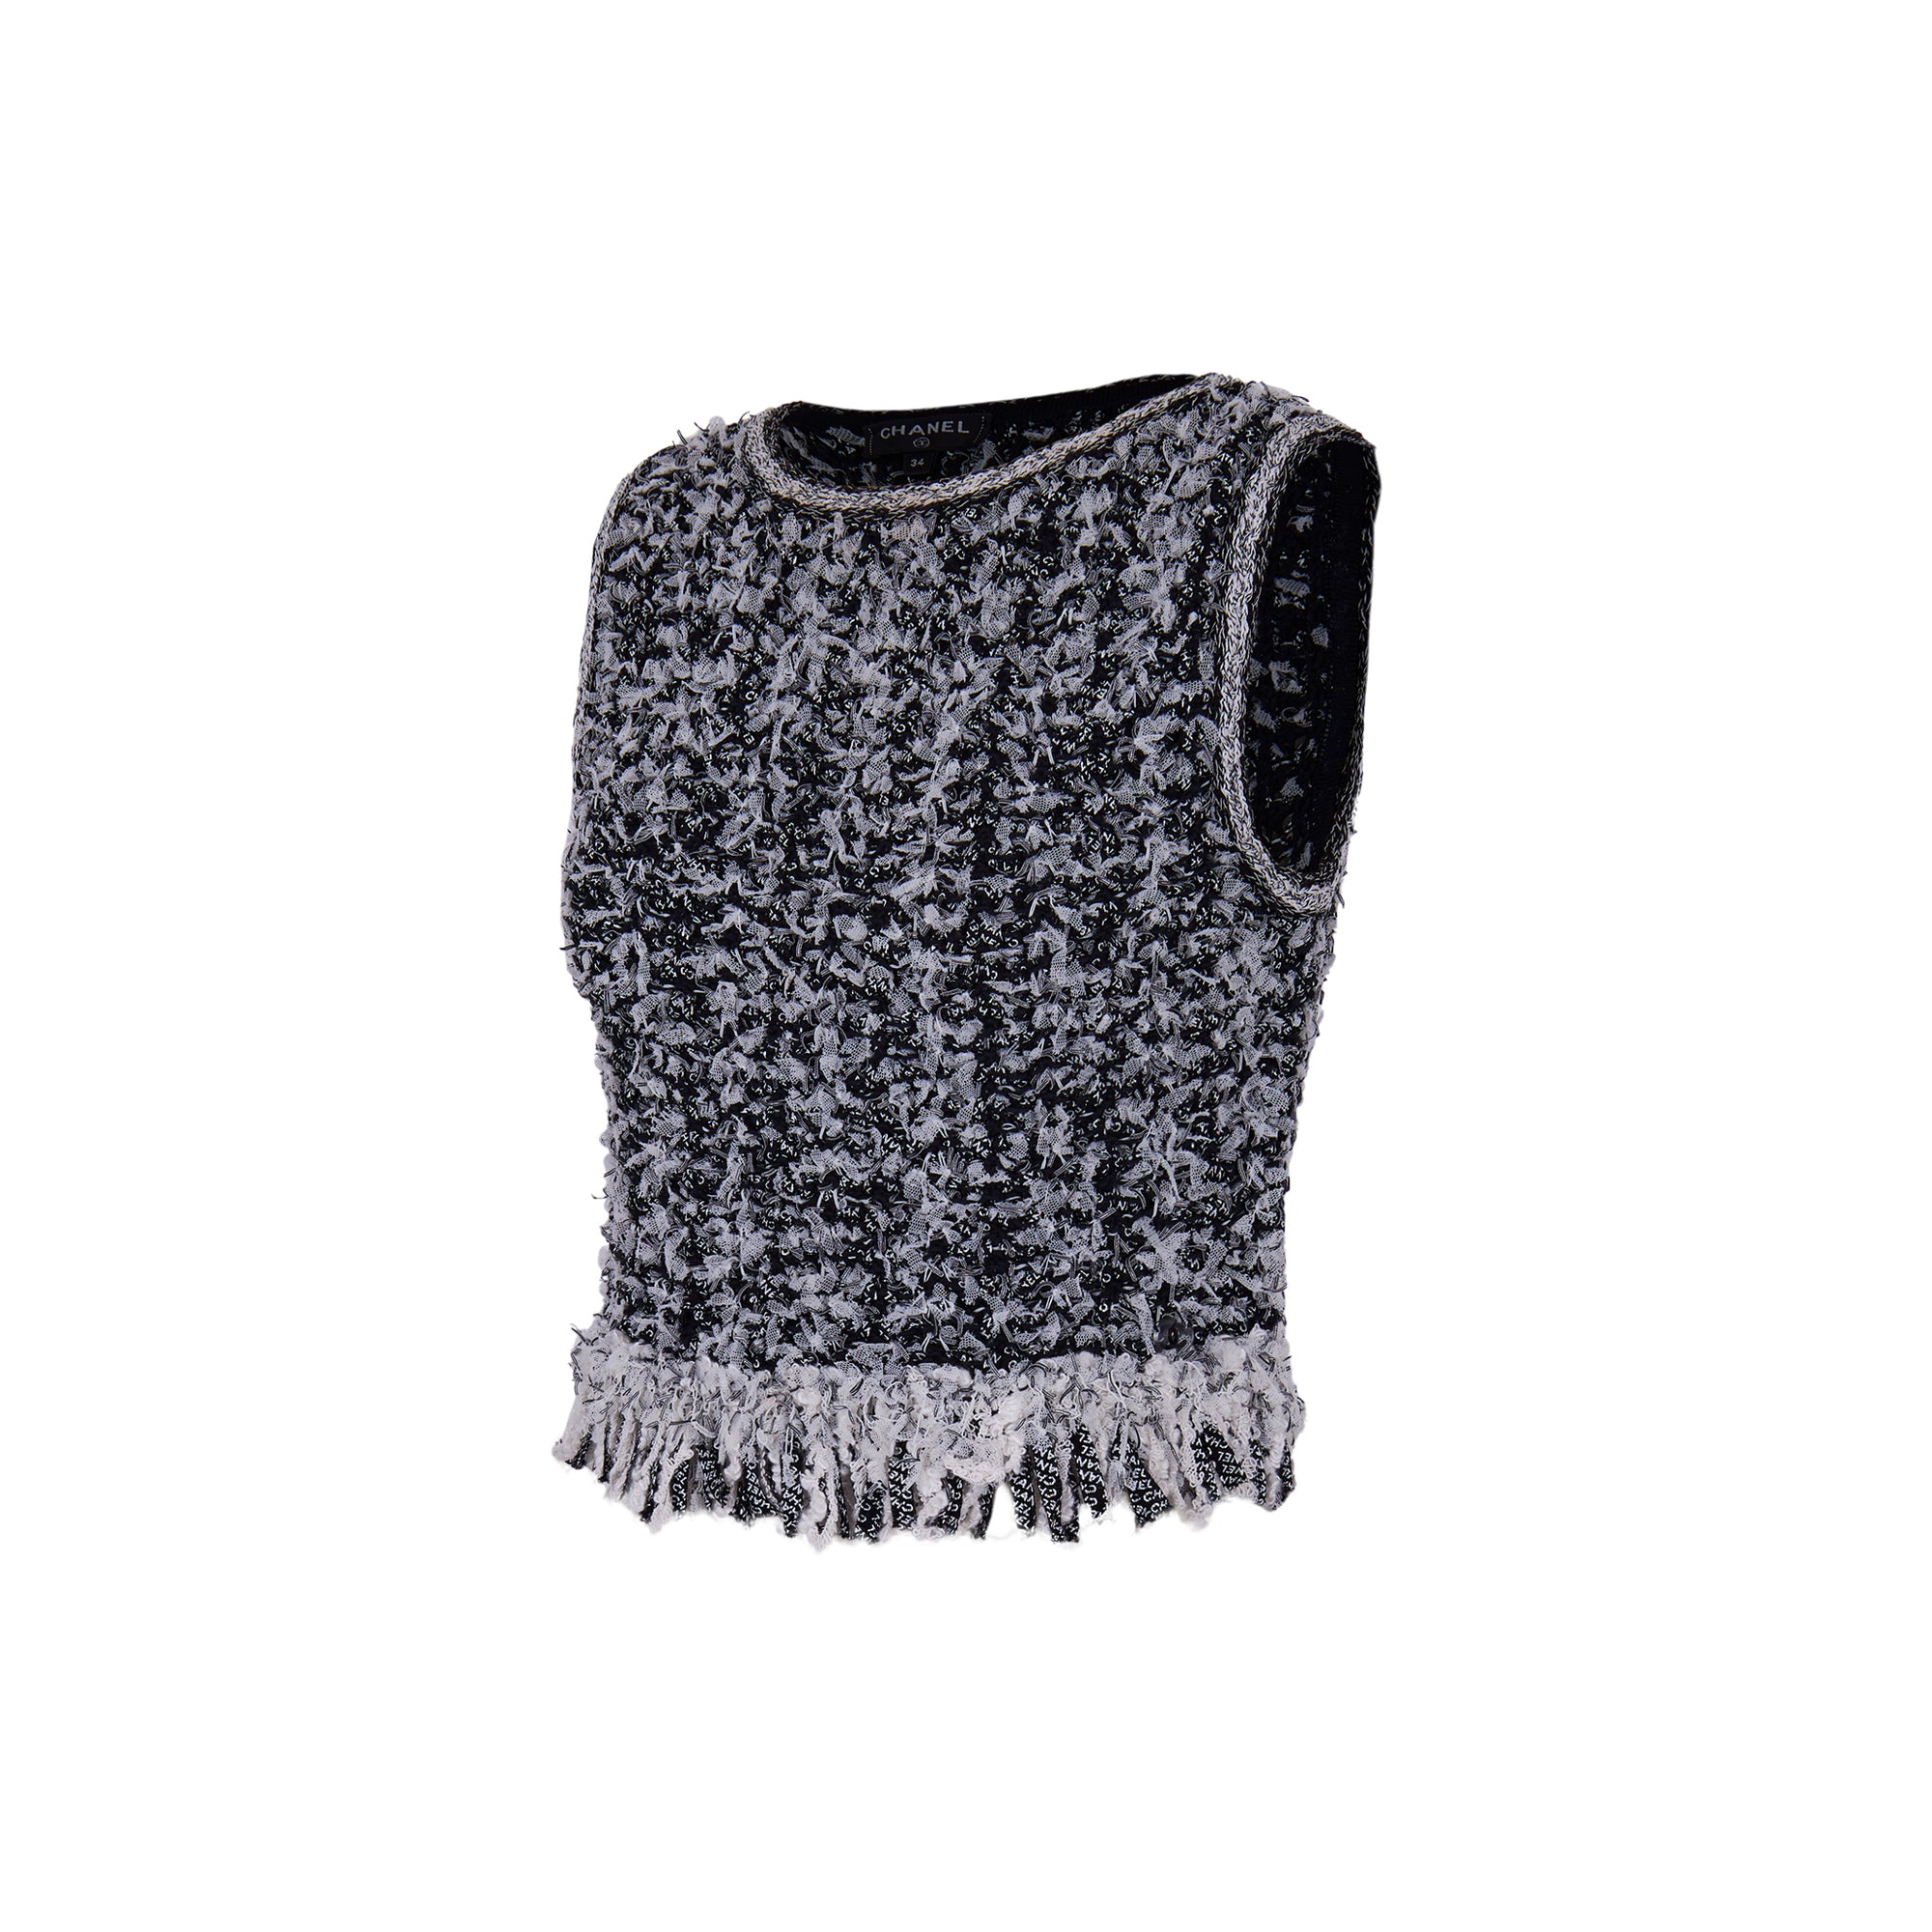 Chanel vest tweed knit top